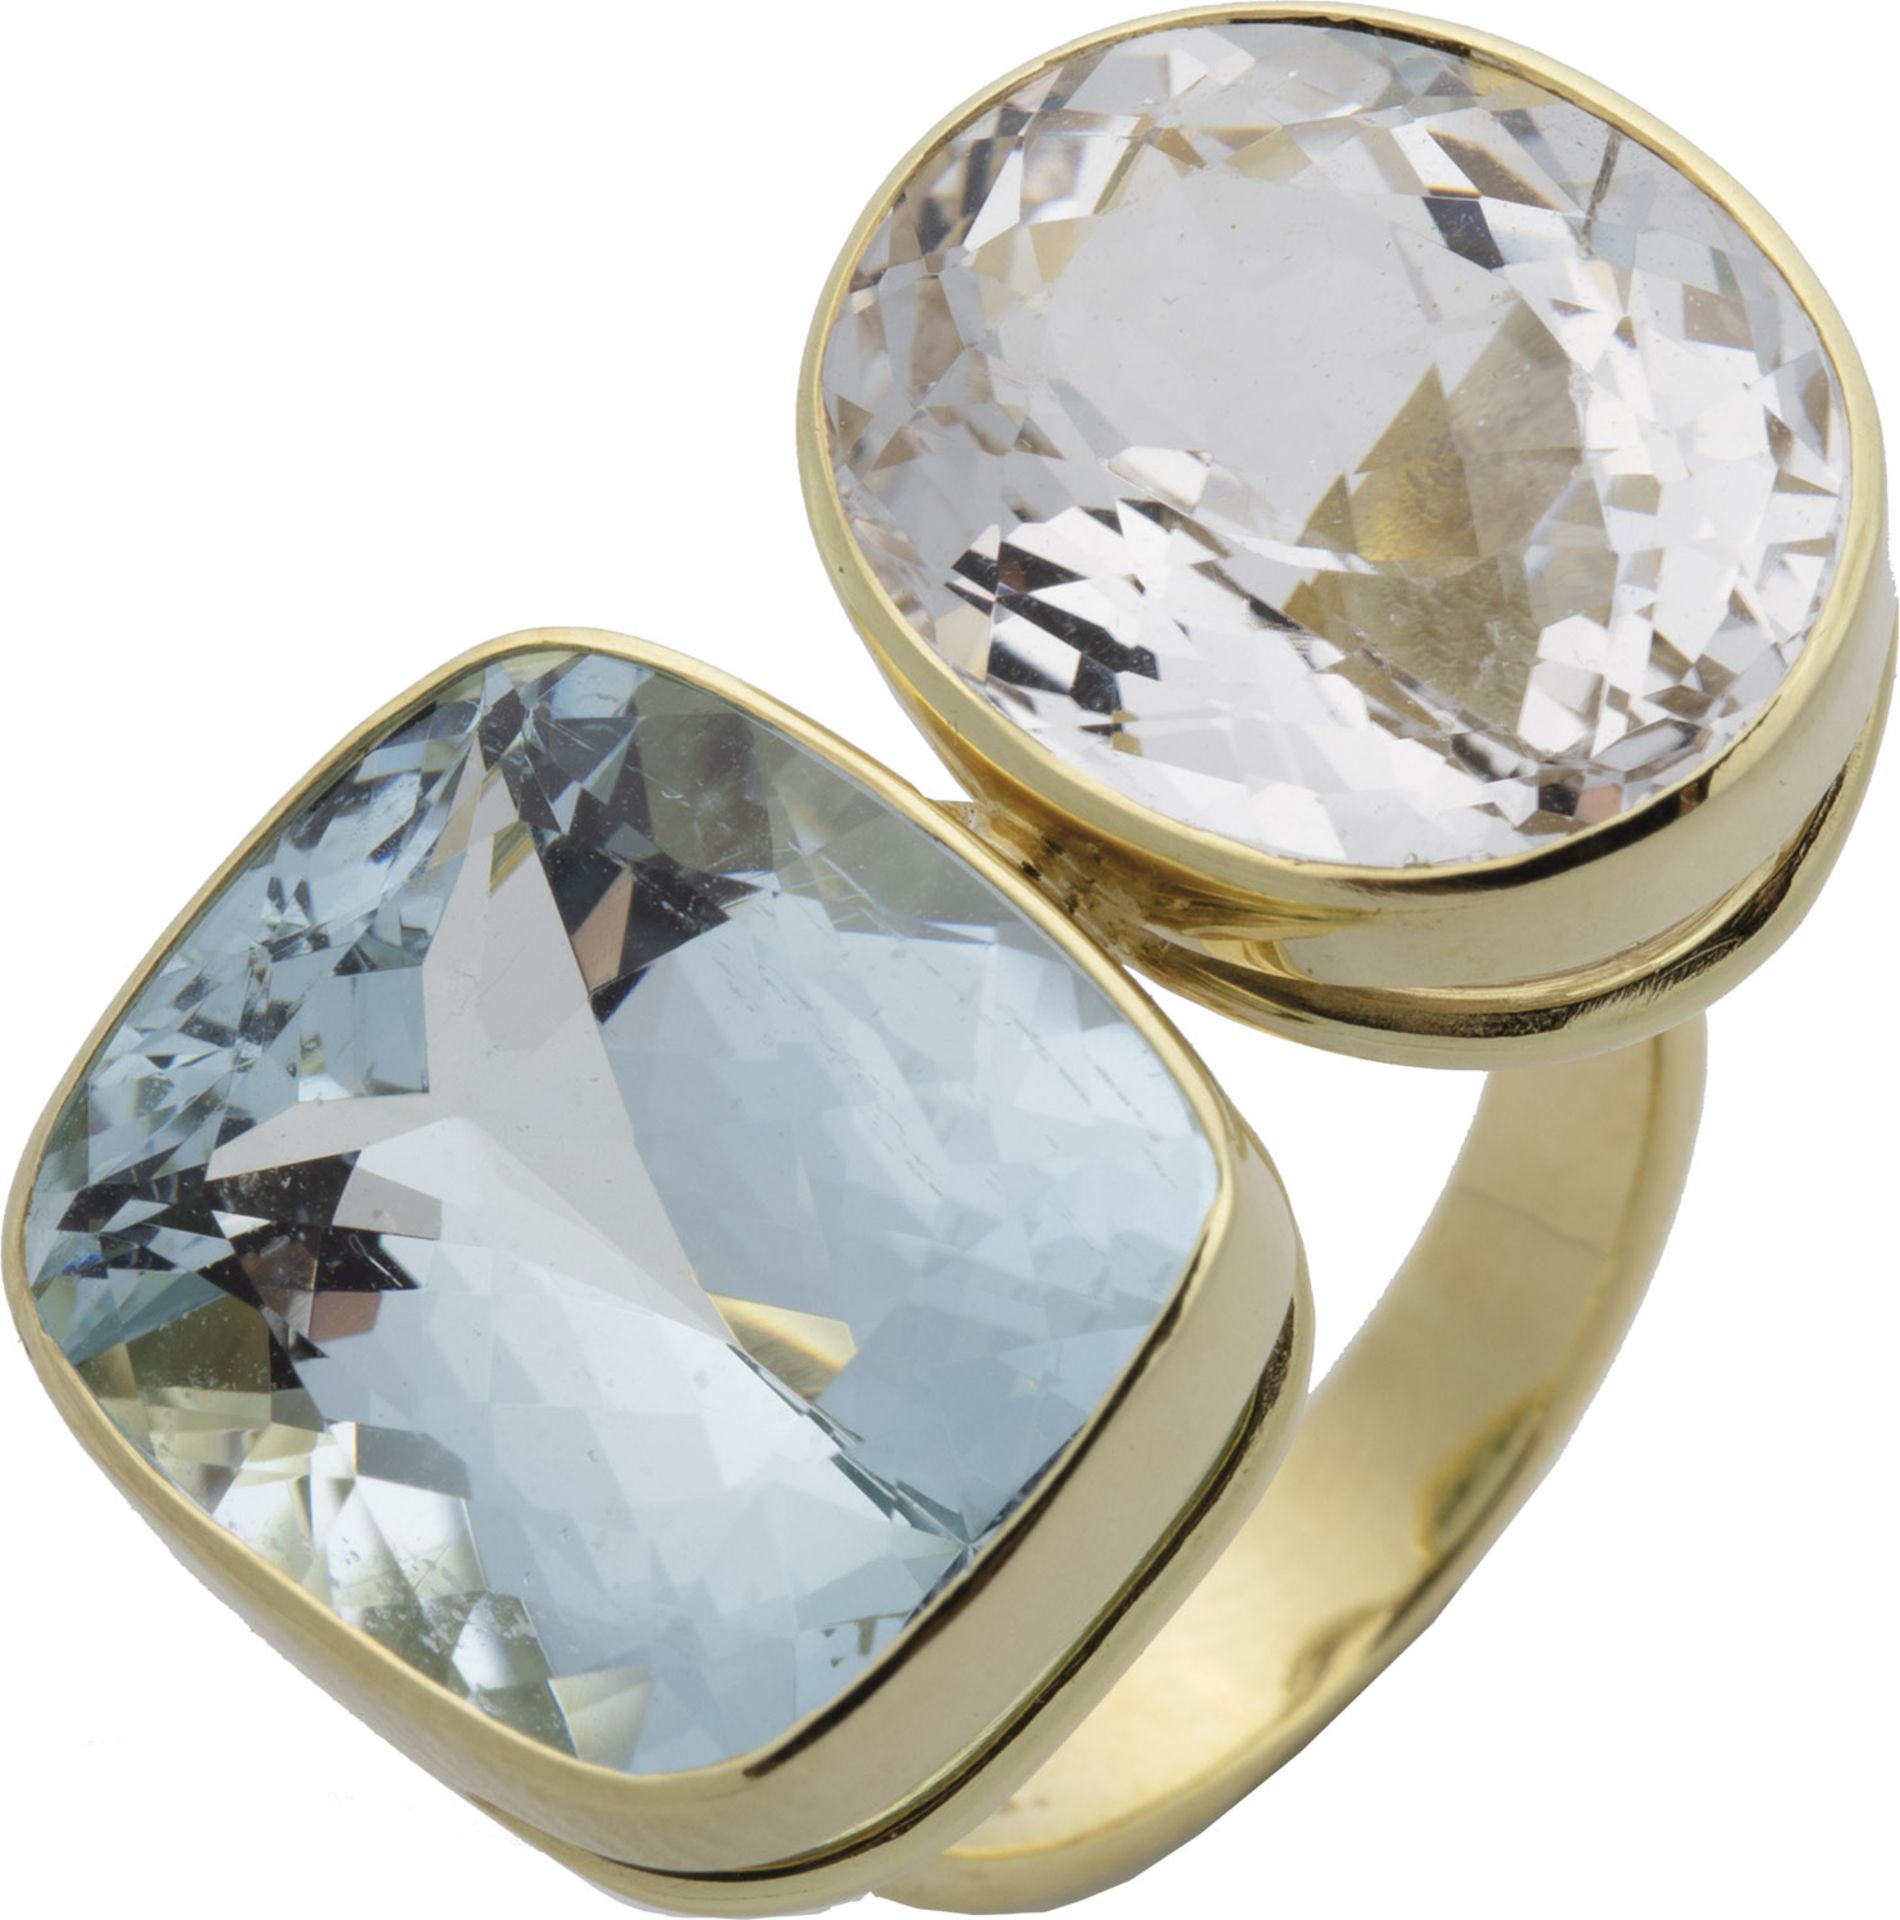 Ring with morganite and aquamarine